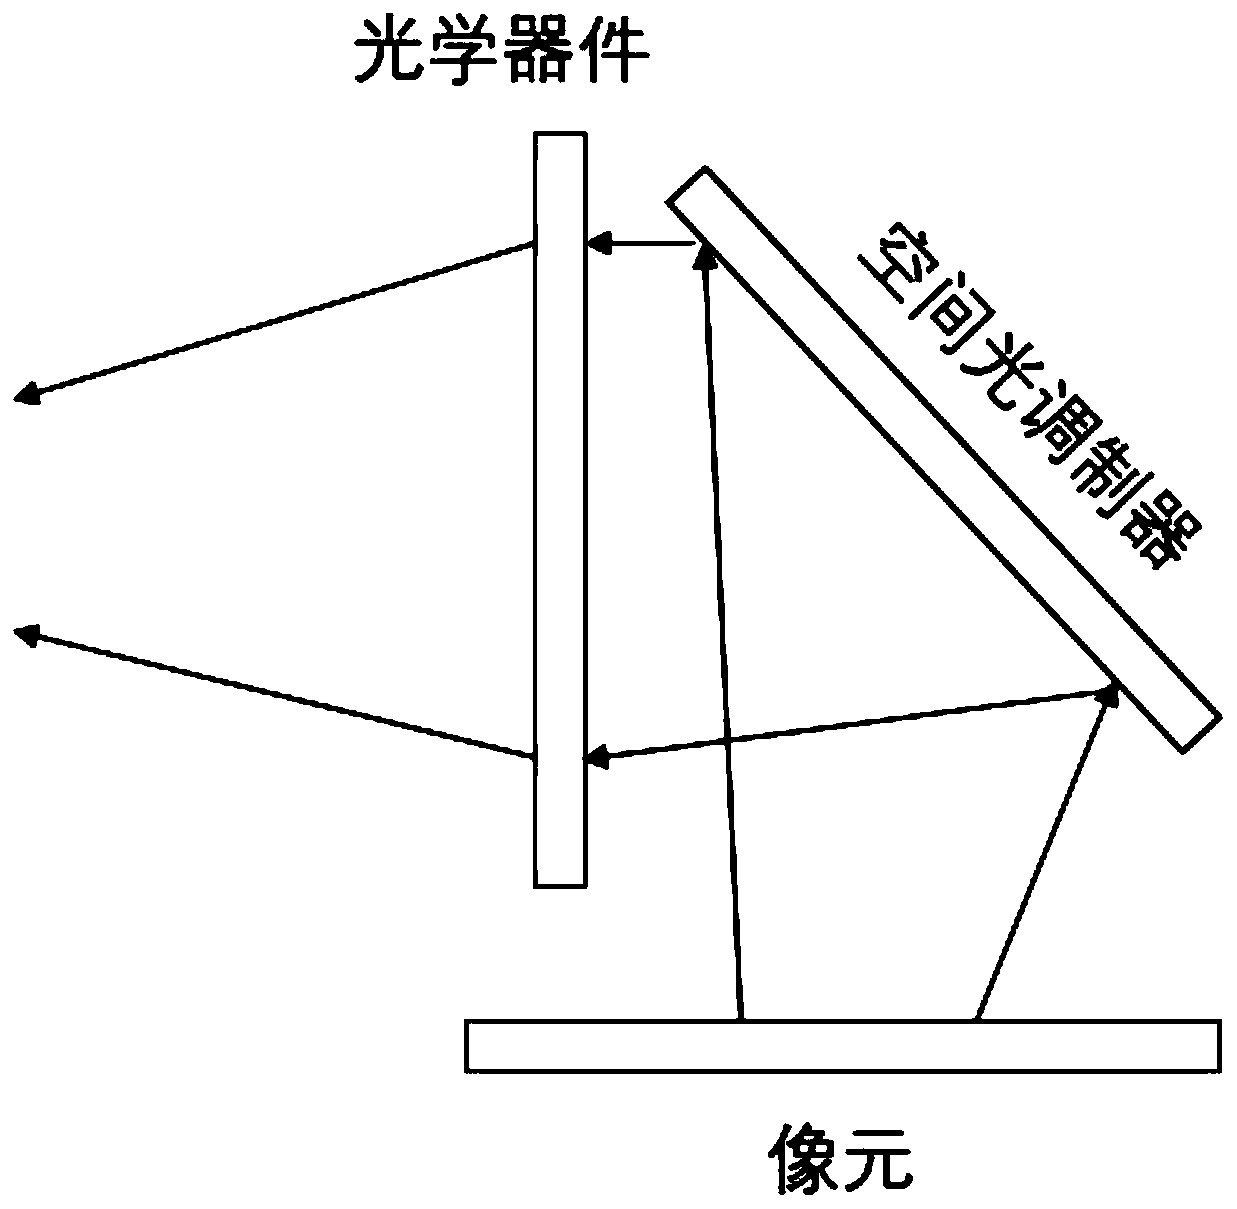 Display system and binocular system